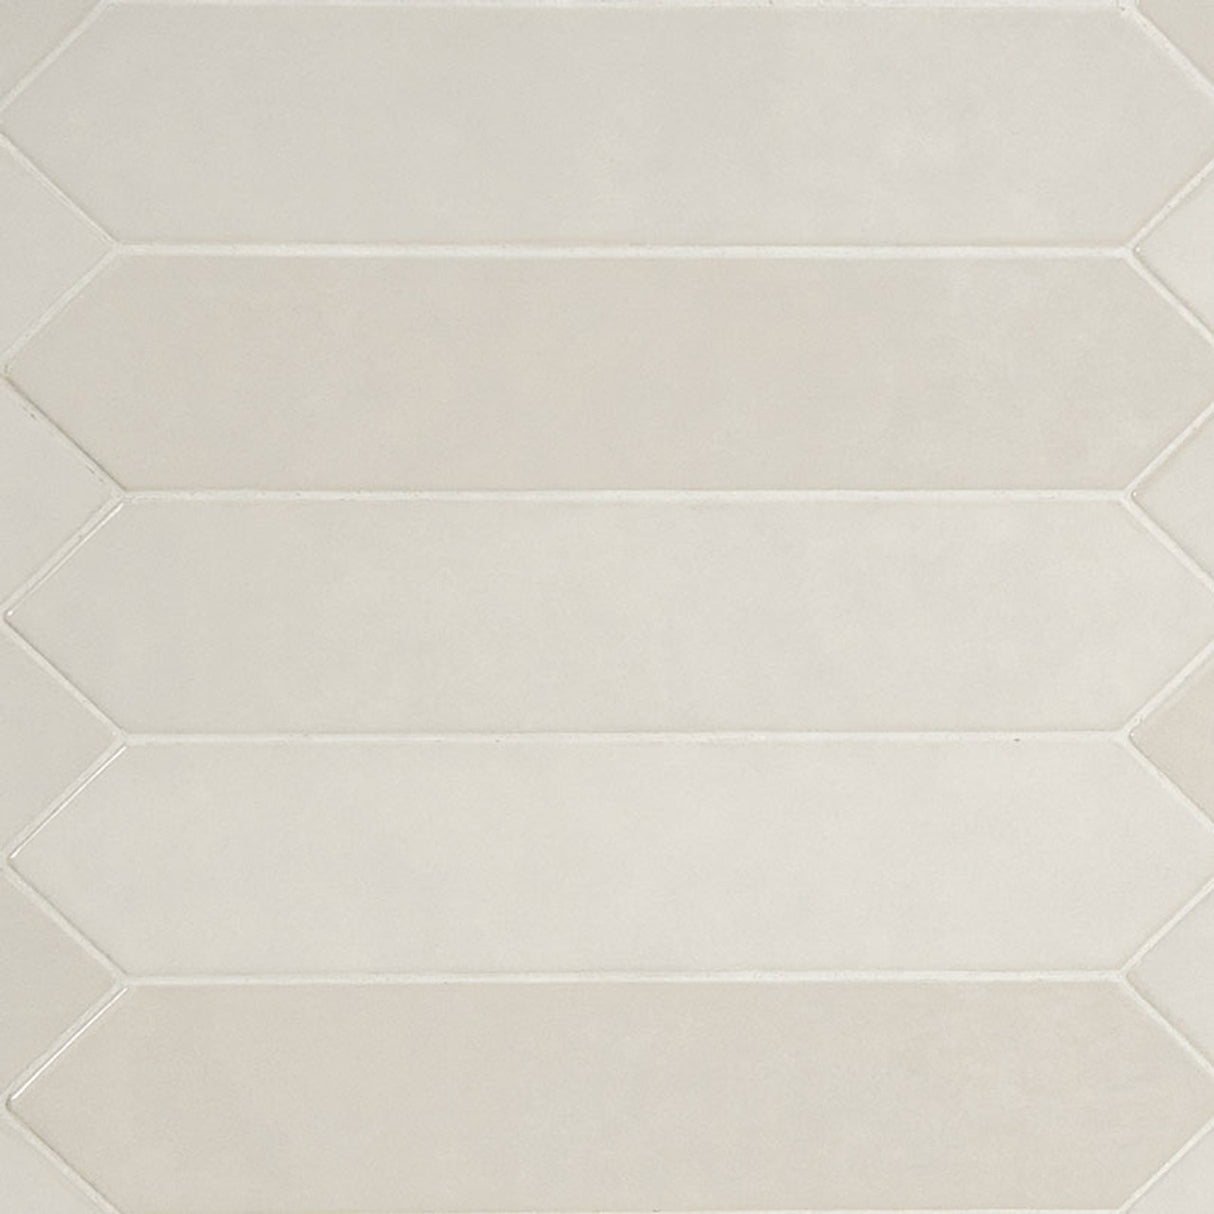 Renzo dove pickett 2.5x13 glossy ceramic white wall tile NRENDOVPIC2.5X13 product shot multiple tiles angle view